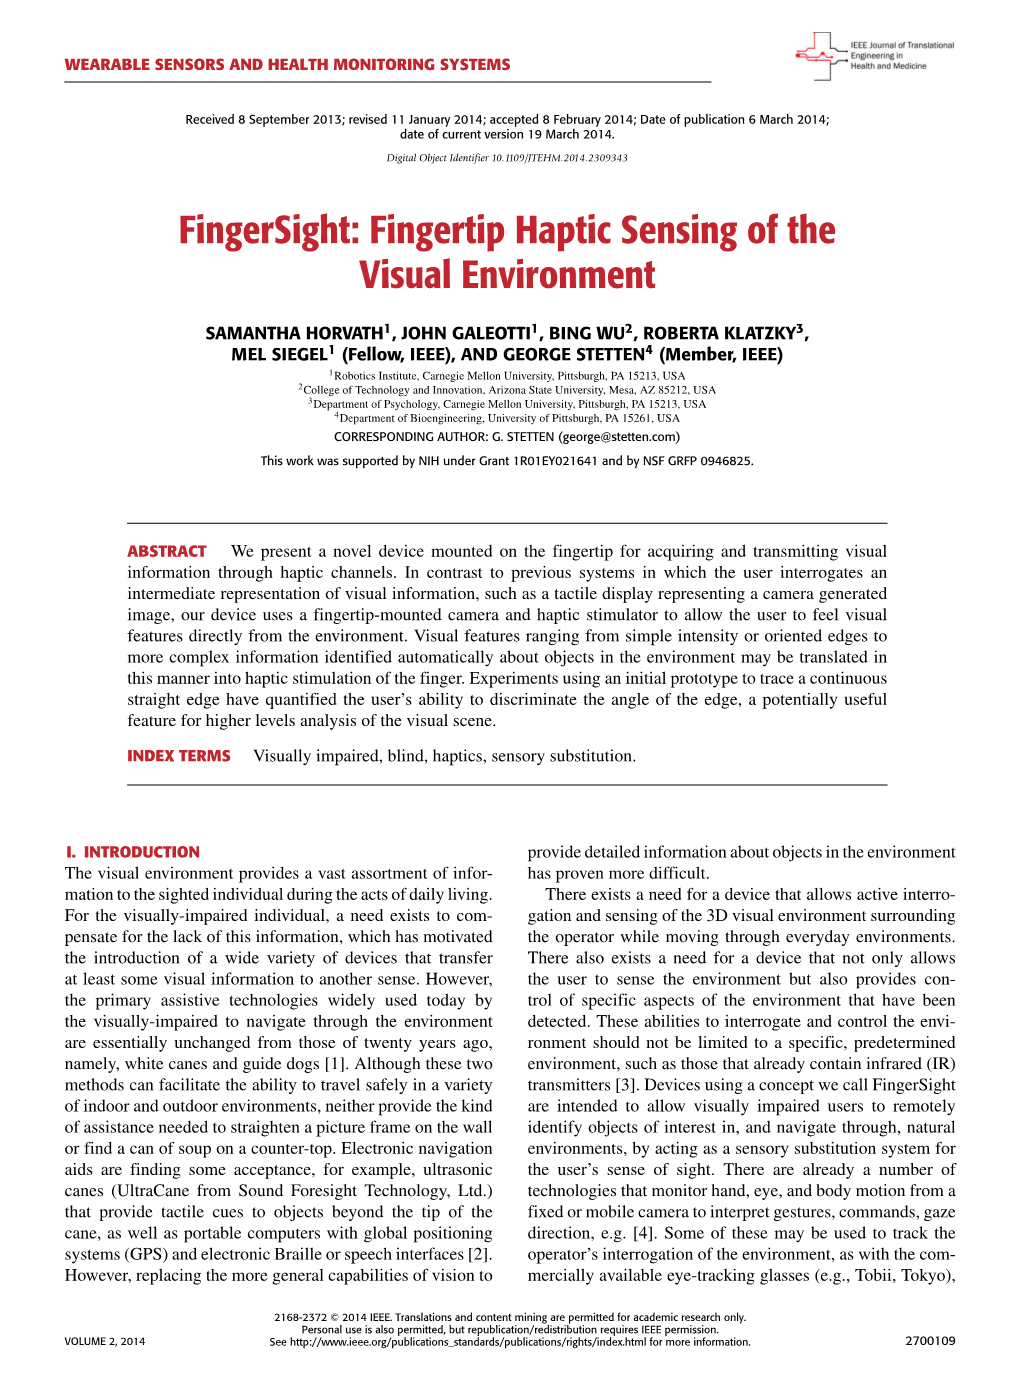 Fingersight: Fingertip Haptic Sensing of the Visual Environment